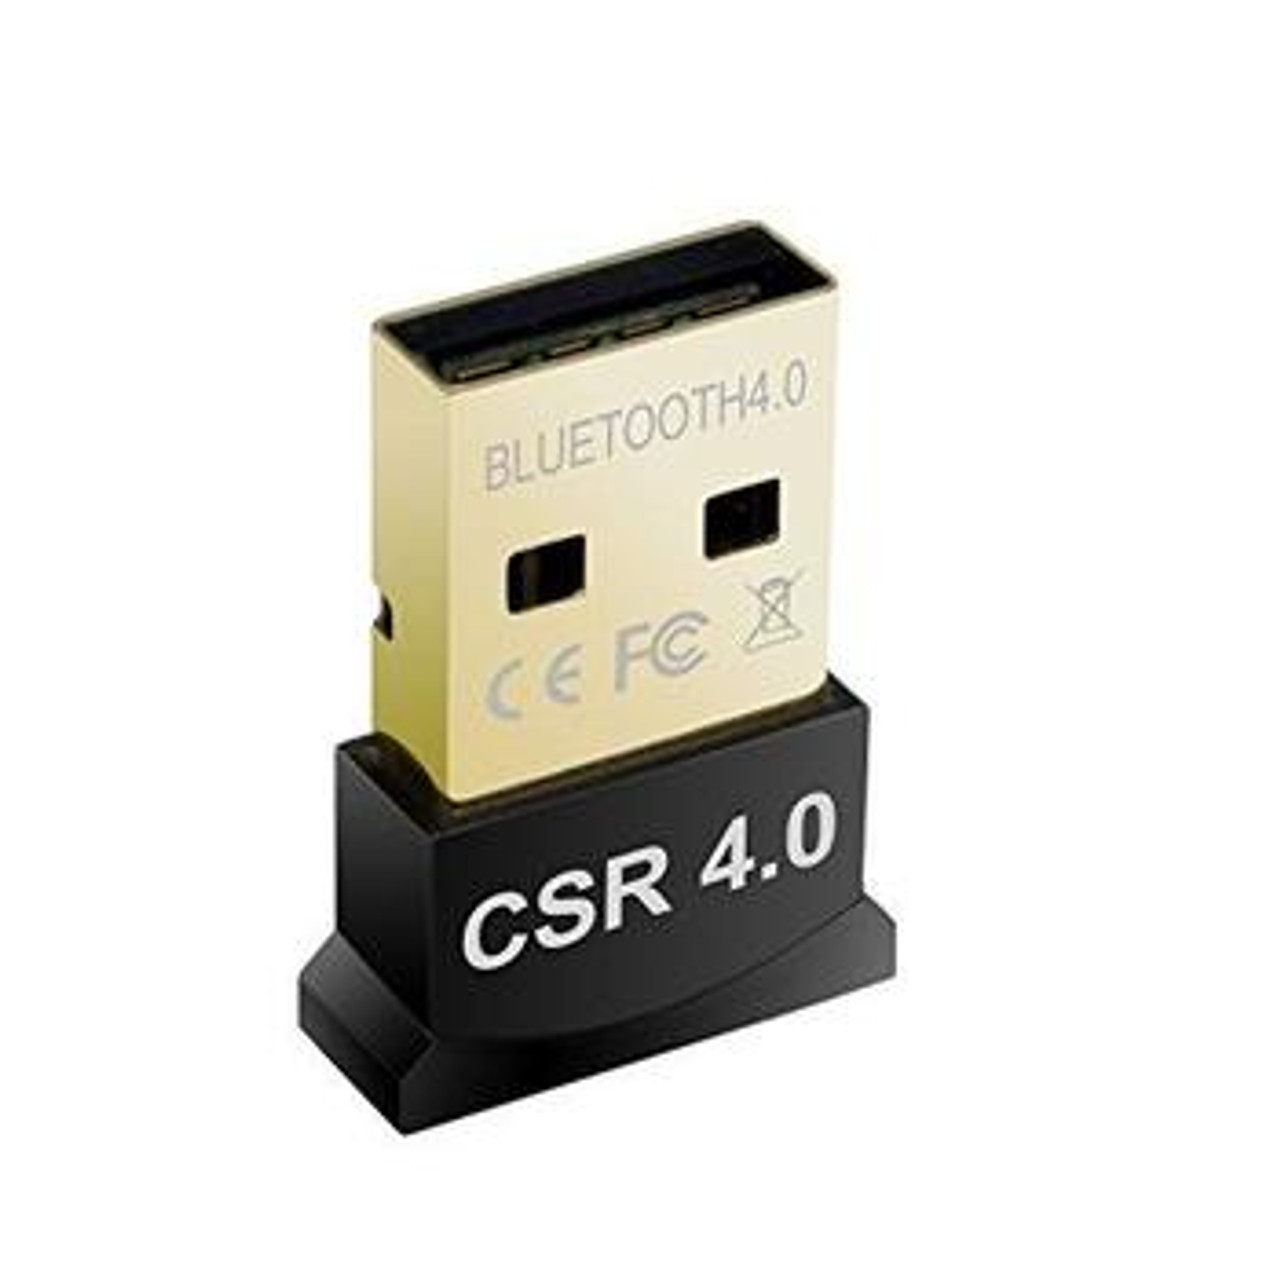 Saris BlueGiga Bluetooth PC USB Dongle